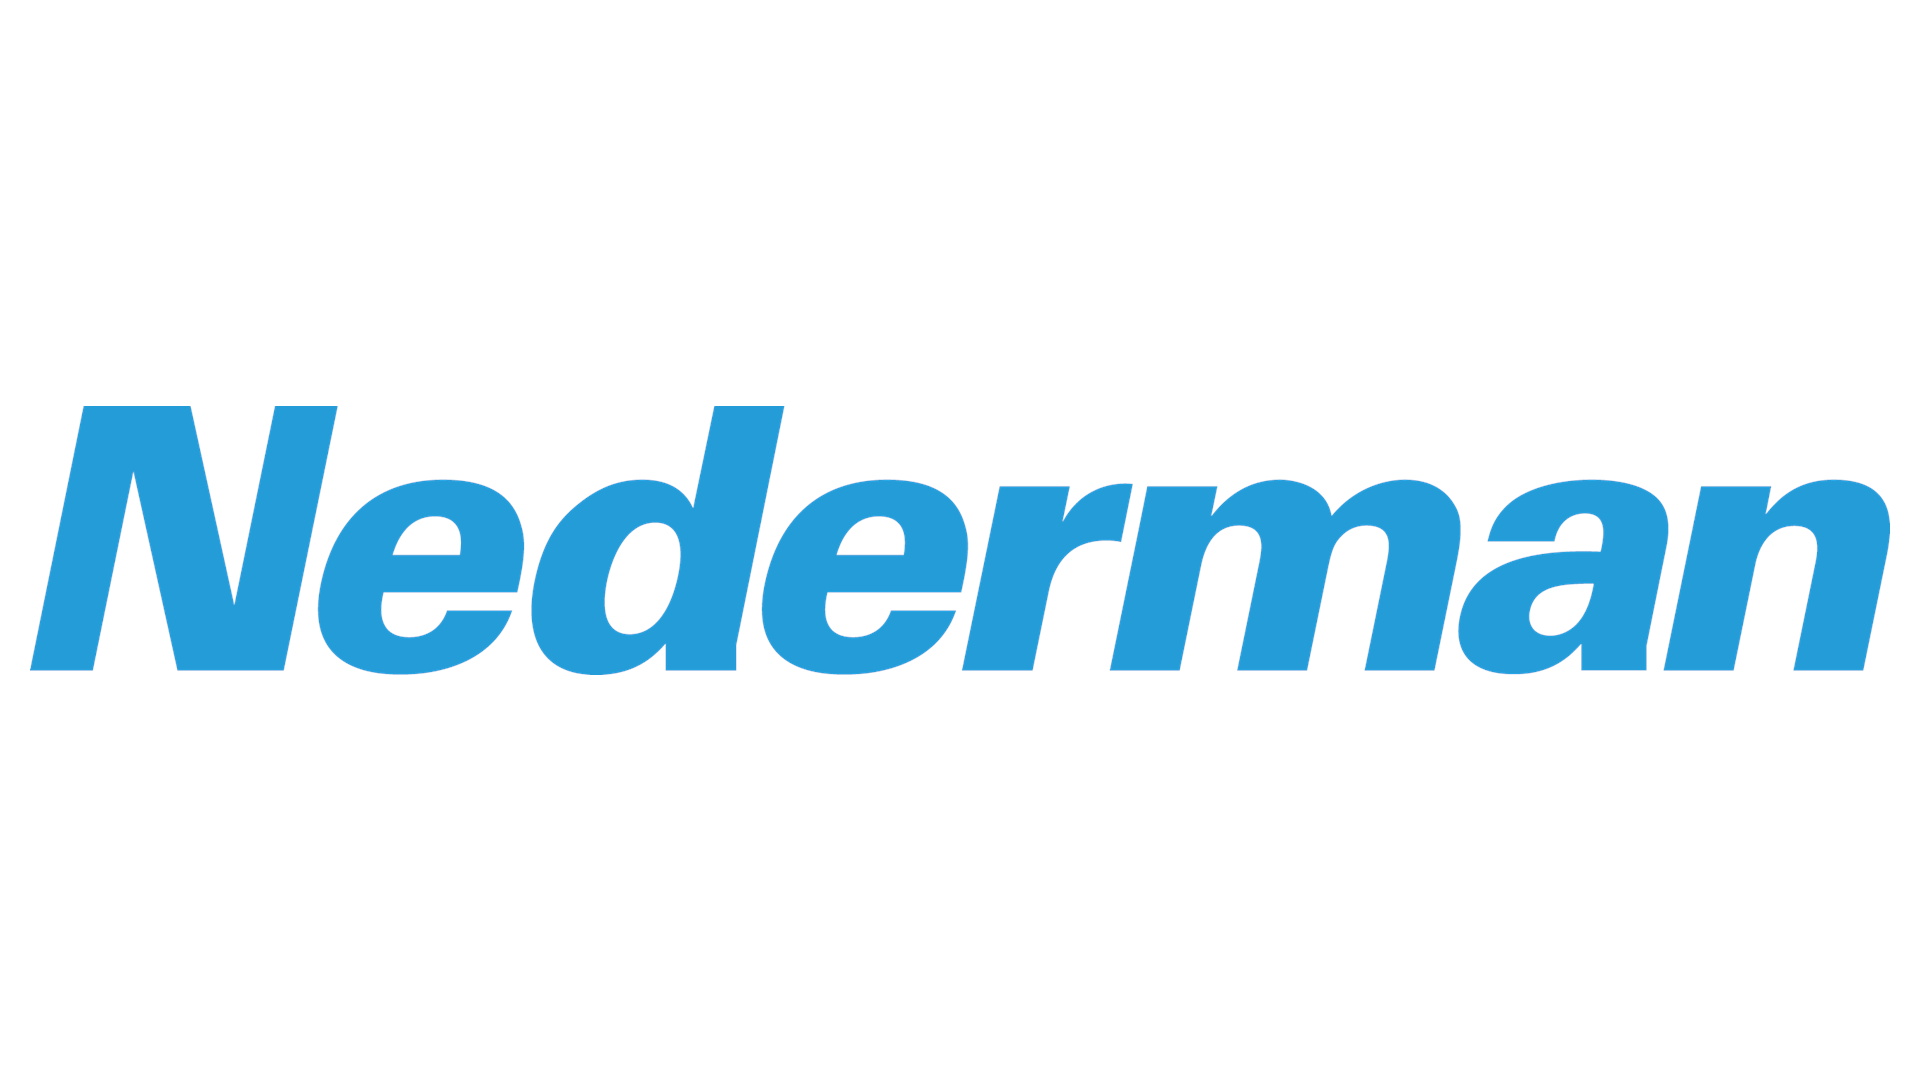 Nederman Logo